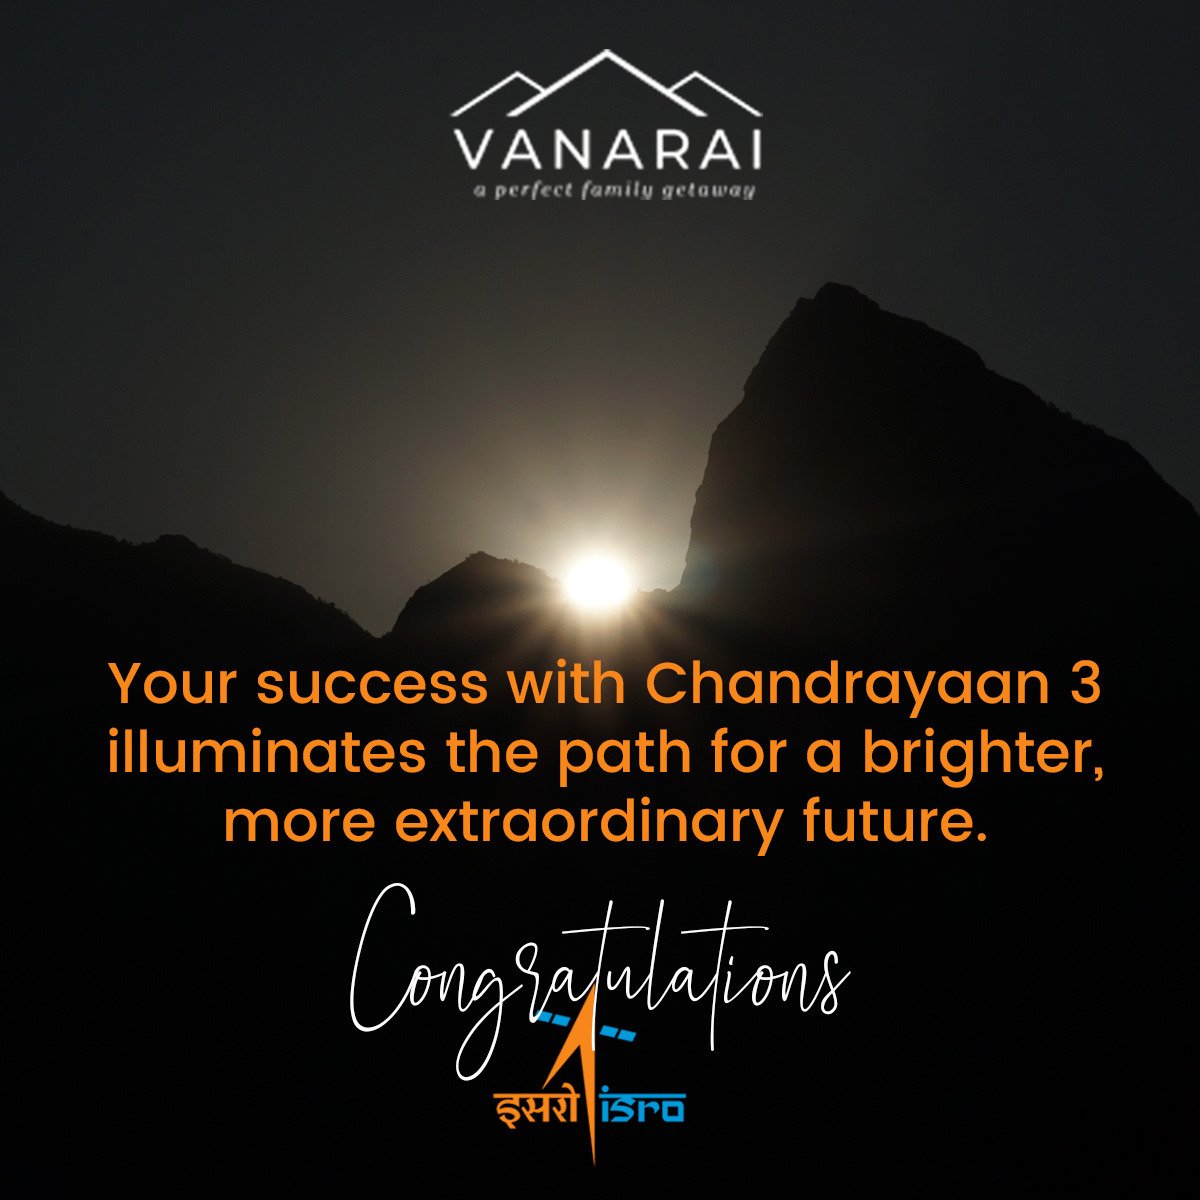 'Congratulations, India, on a Stellar Triumph!

#Chandrayaan3Landing
#Chandrayaan3Mission
#India
#isrochandrayaan3mission
#Chandrayaan_3
#Ch3 
#isroindia 
#ISROMissions